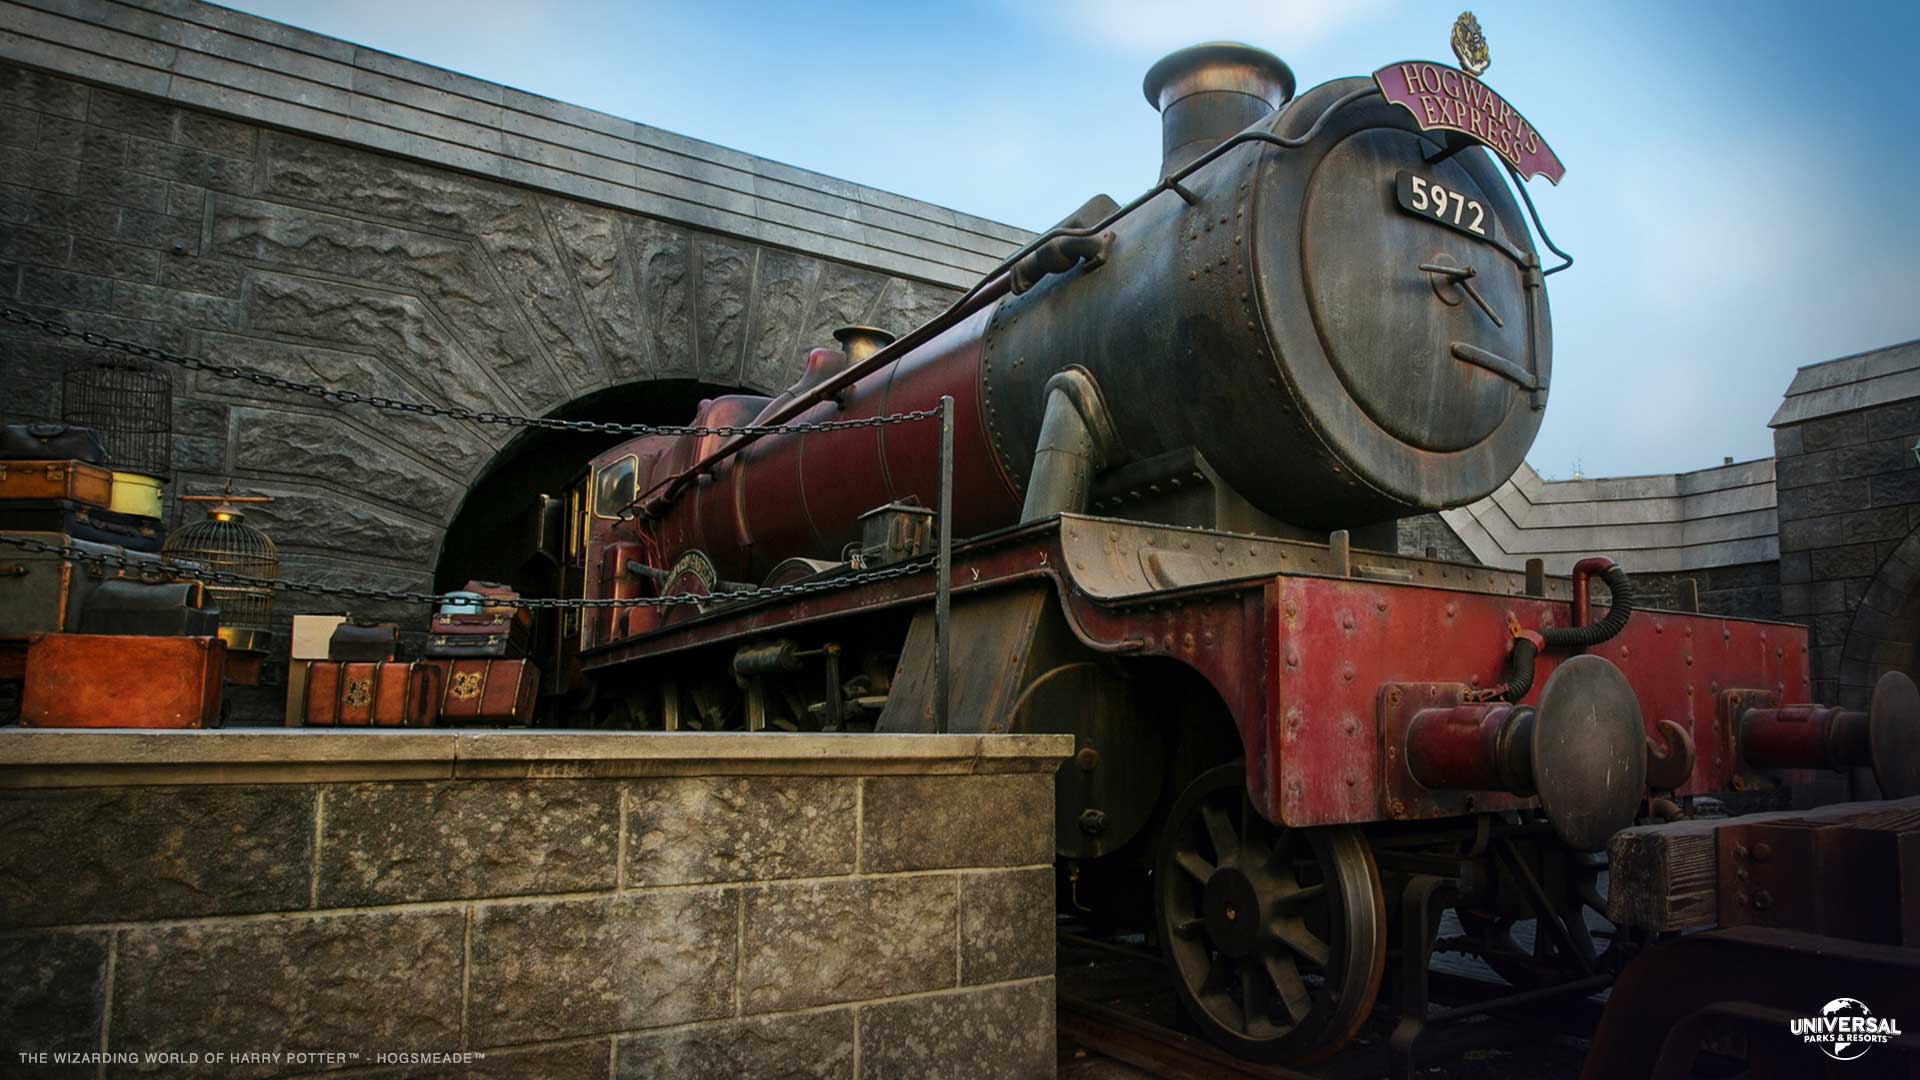 Harry Potter 6 - Hogwarts Express, Universal Studios Hollywood